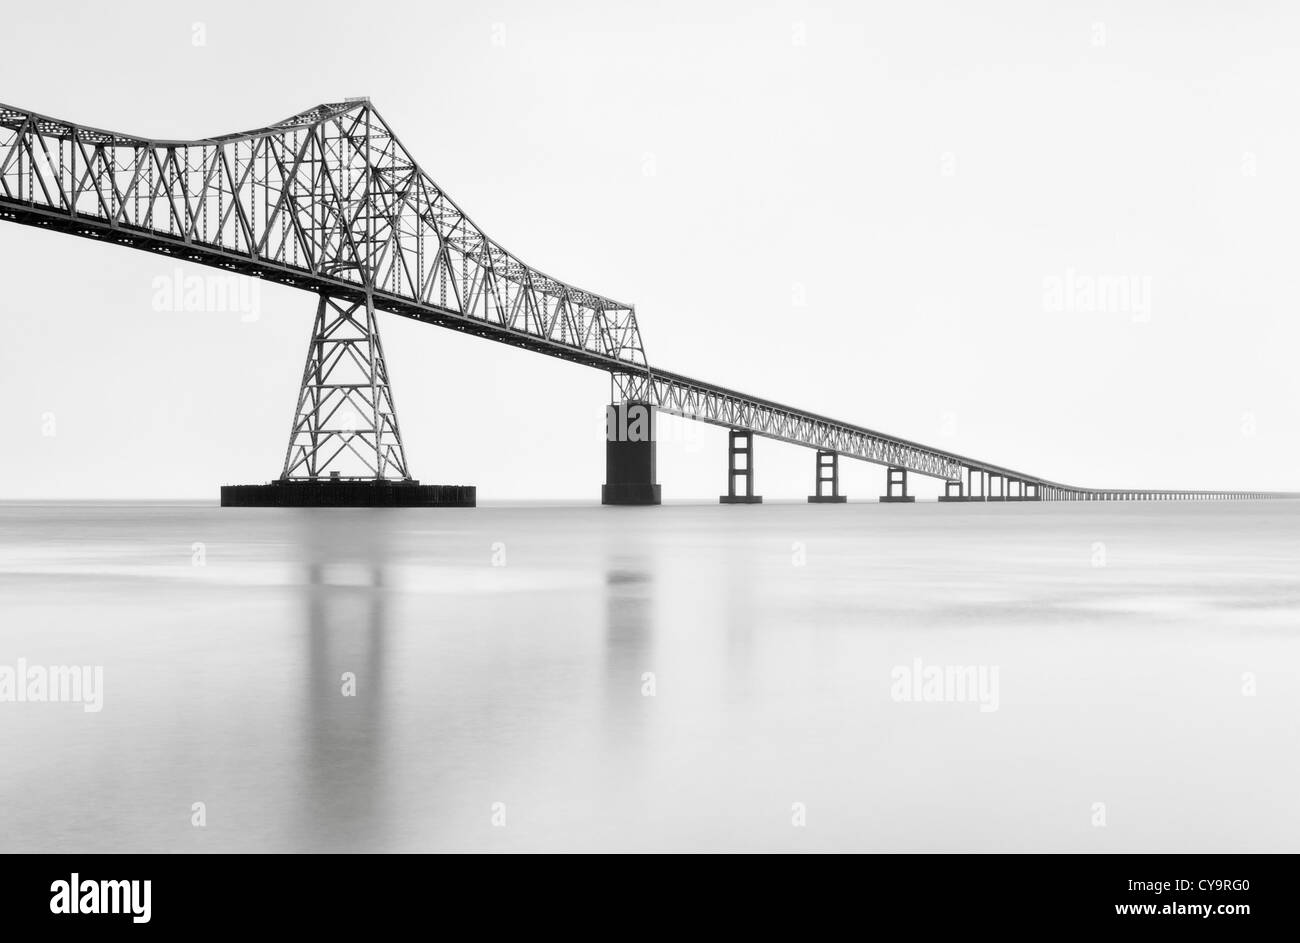 Astoria Bridge (4.1 mi / 6.5km long) spans the mouth of the Columbia River between Astoria, Oregon and Point Ellice near Megler, Washington 1962-1966. Stock Photo